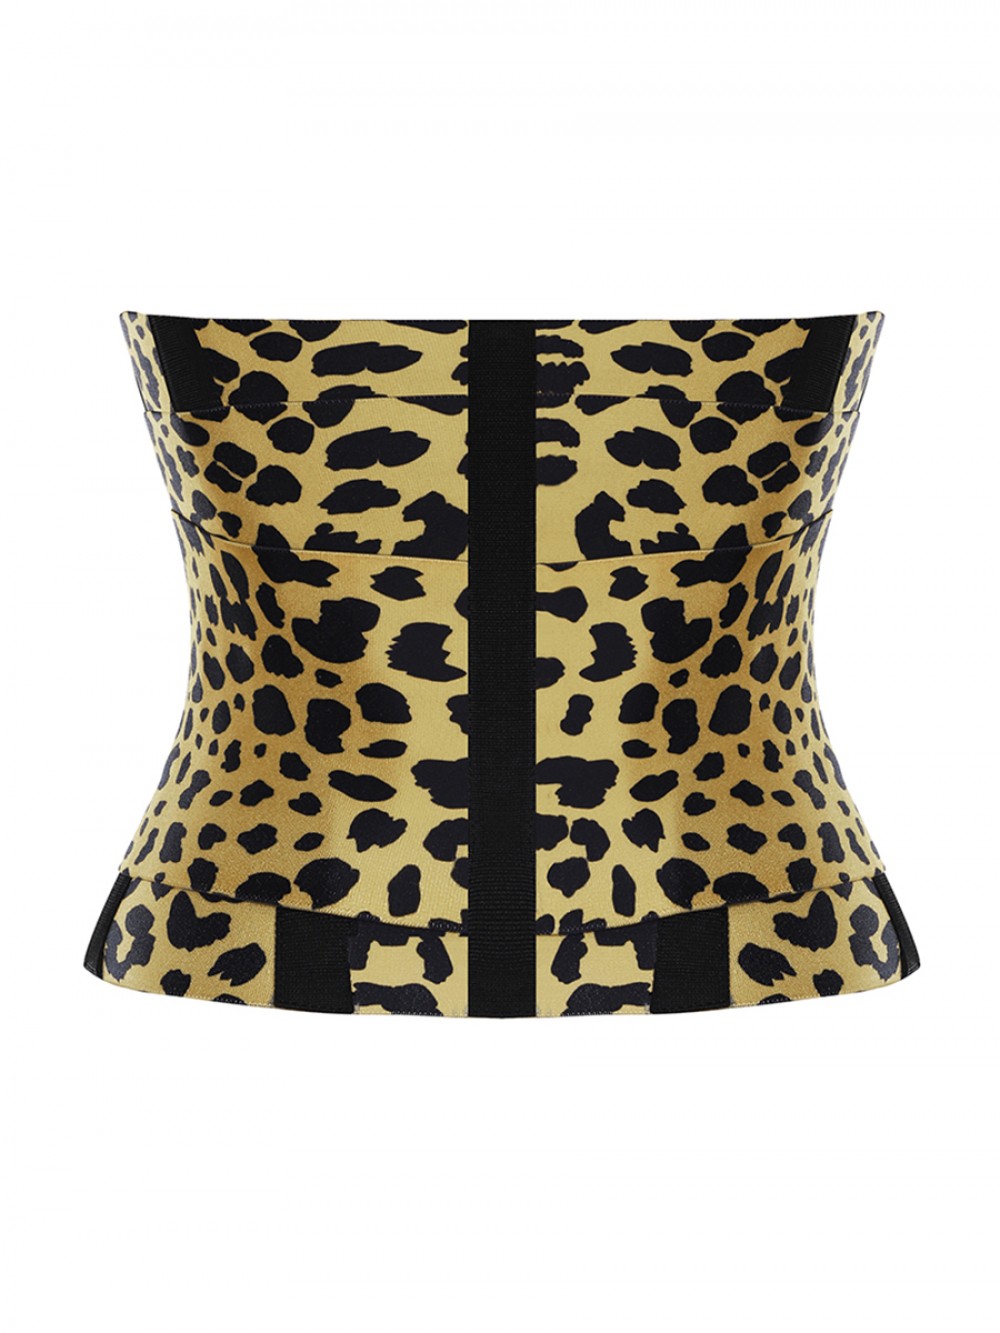 Leopard Print Neoprene Queen Size Waist Cincher Tummy Control